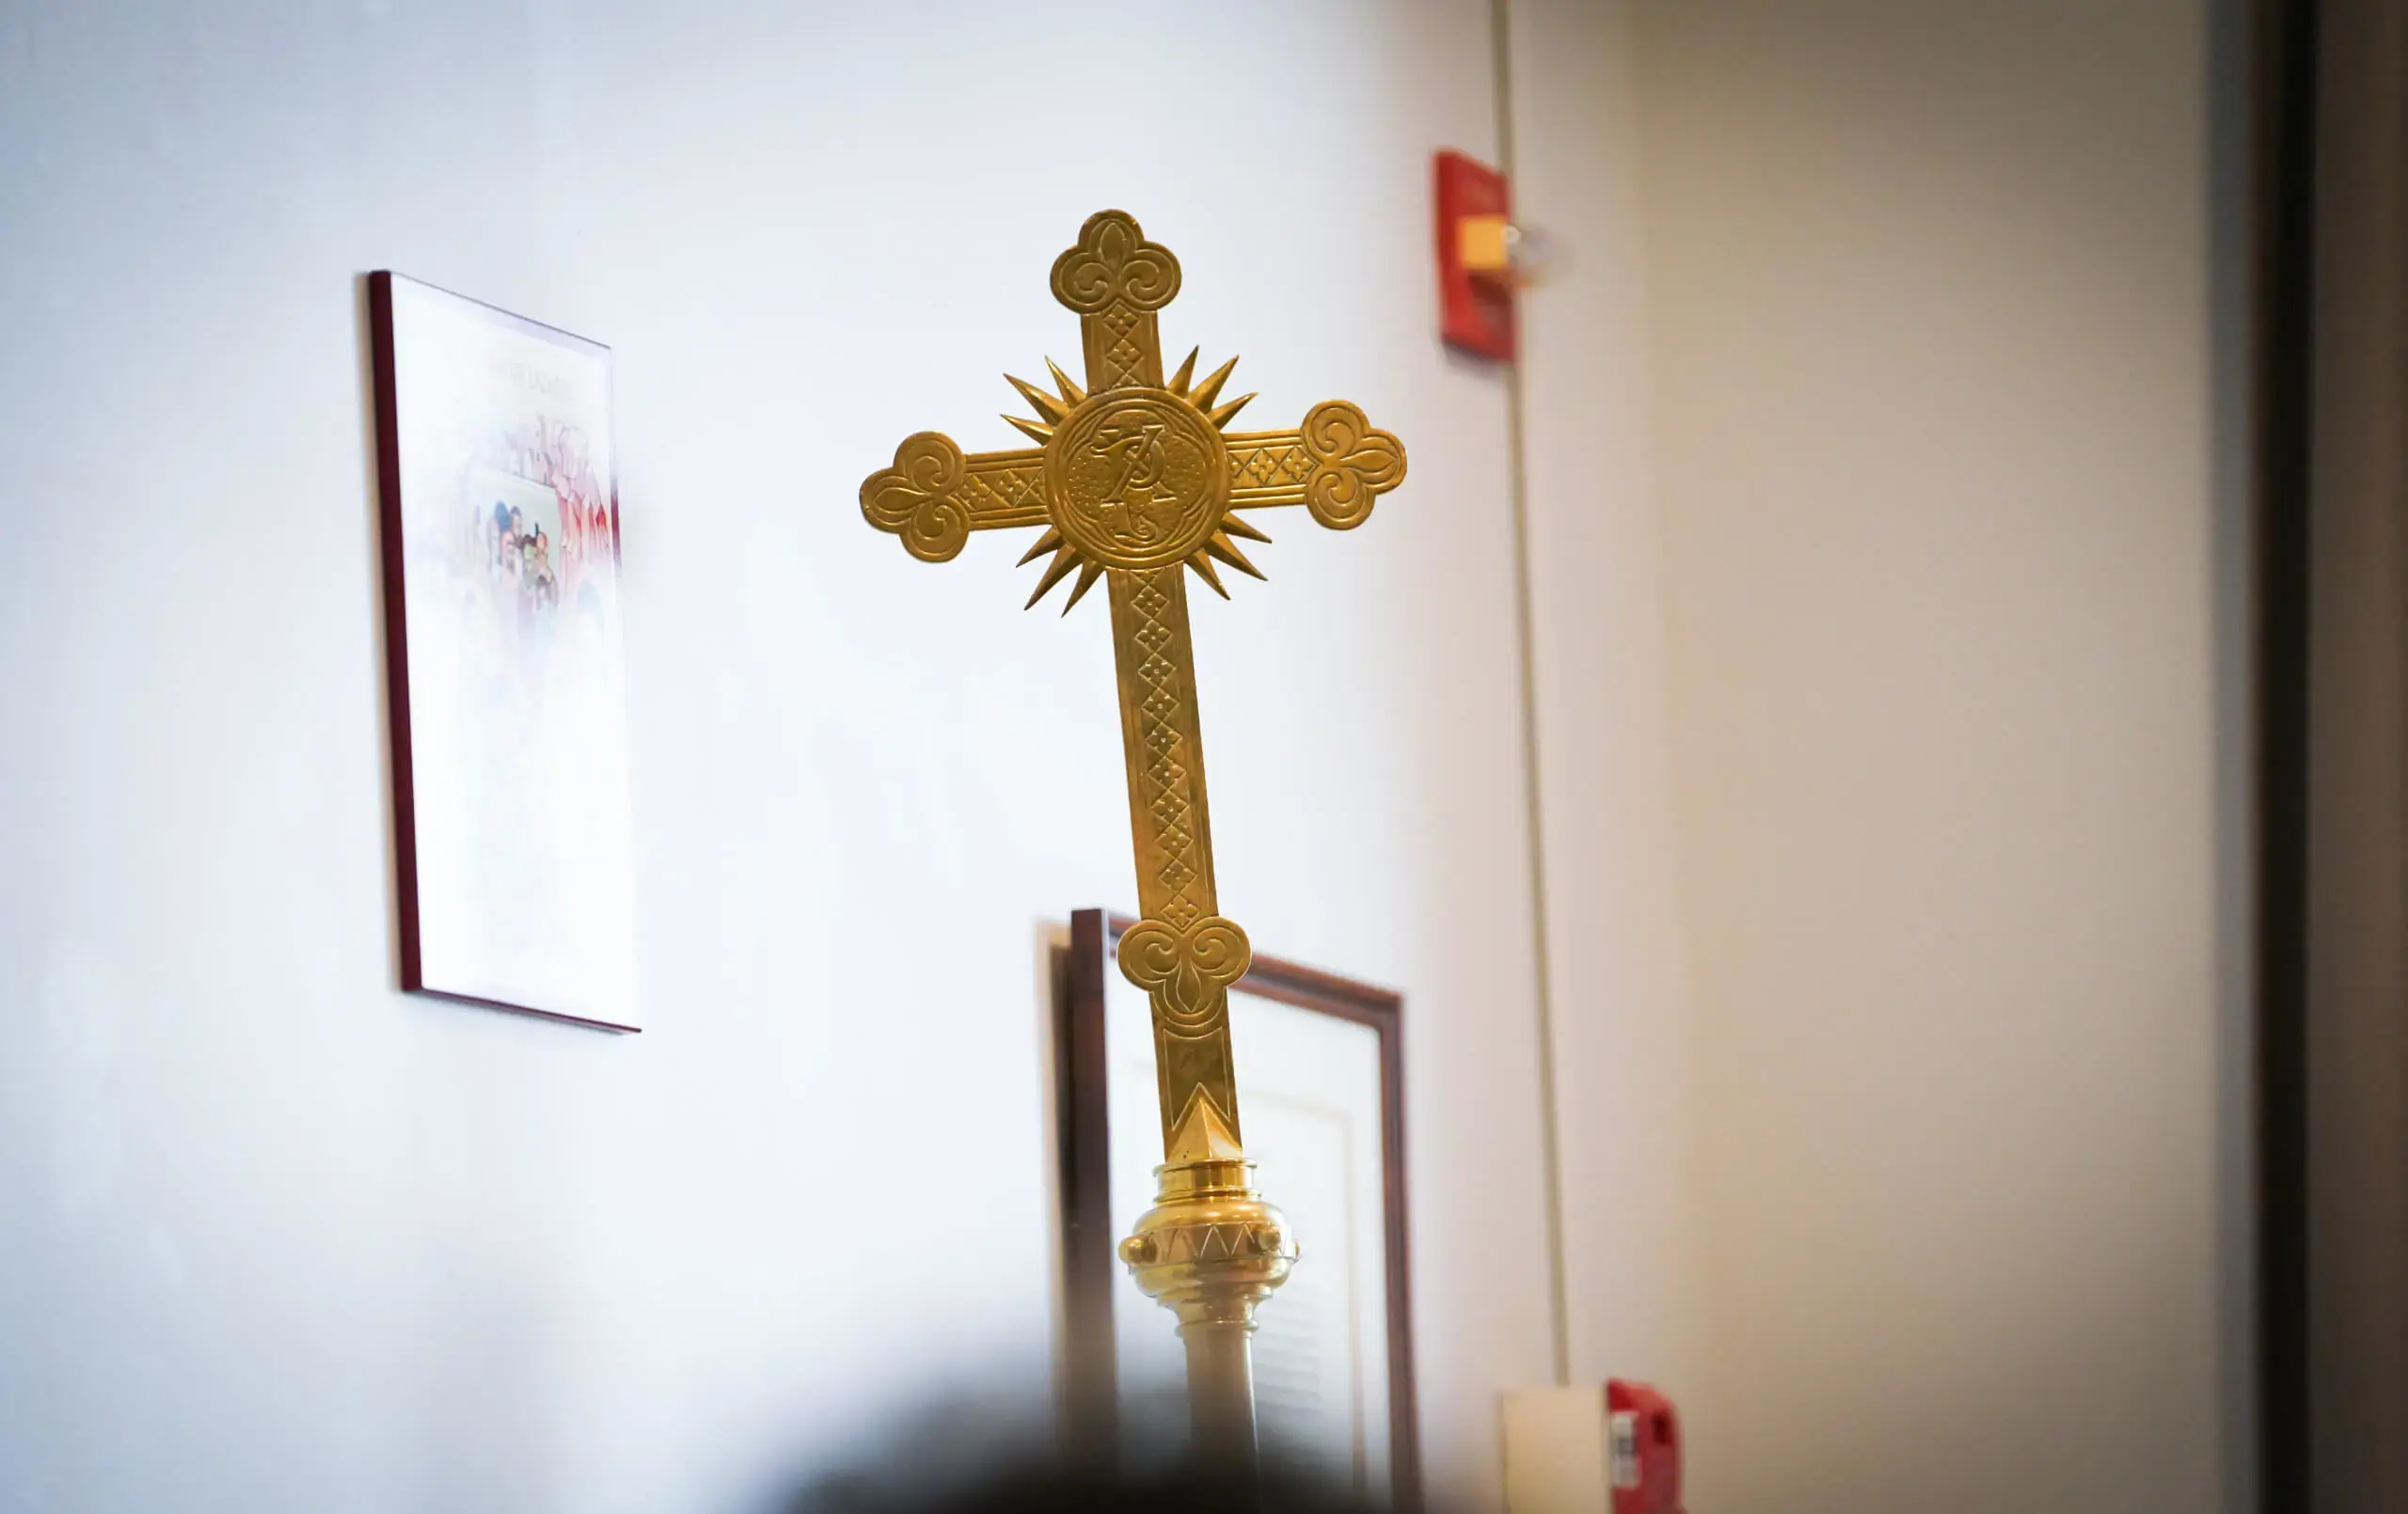 Porter-Gaud processional cross